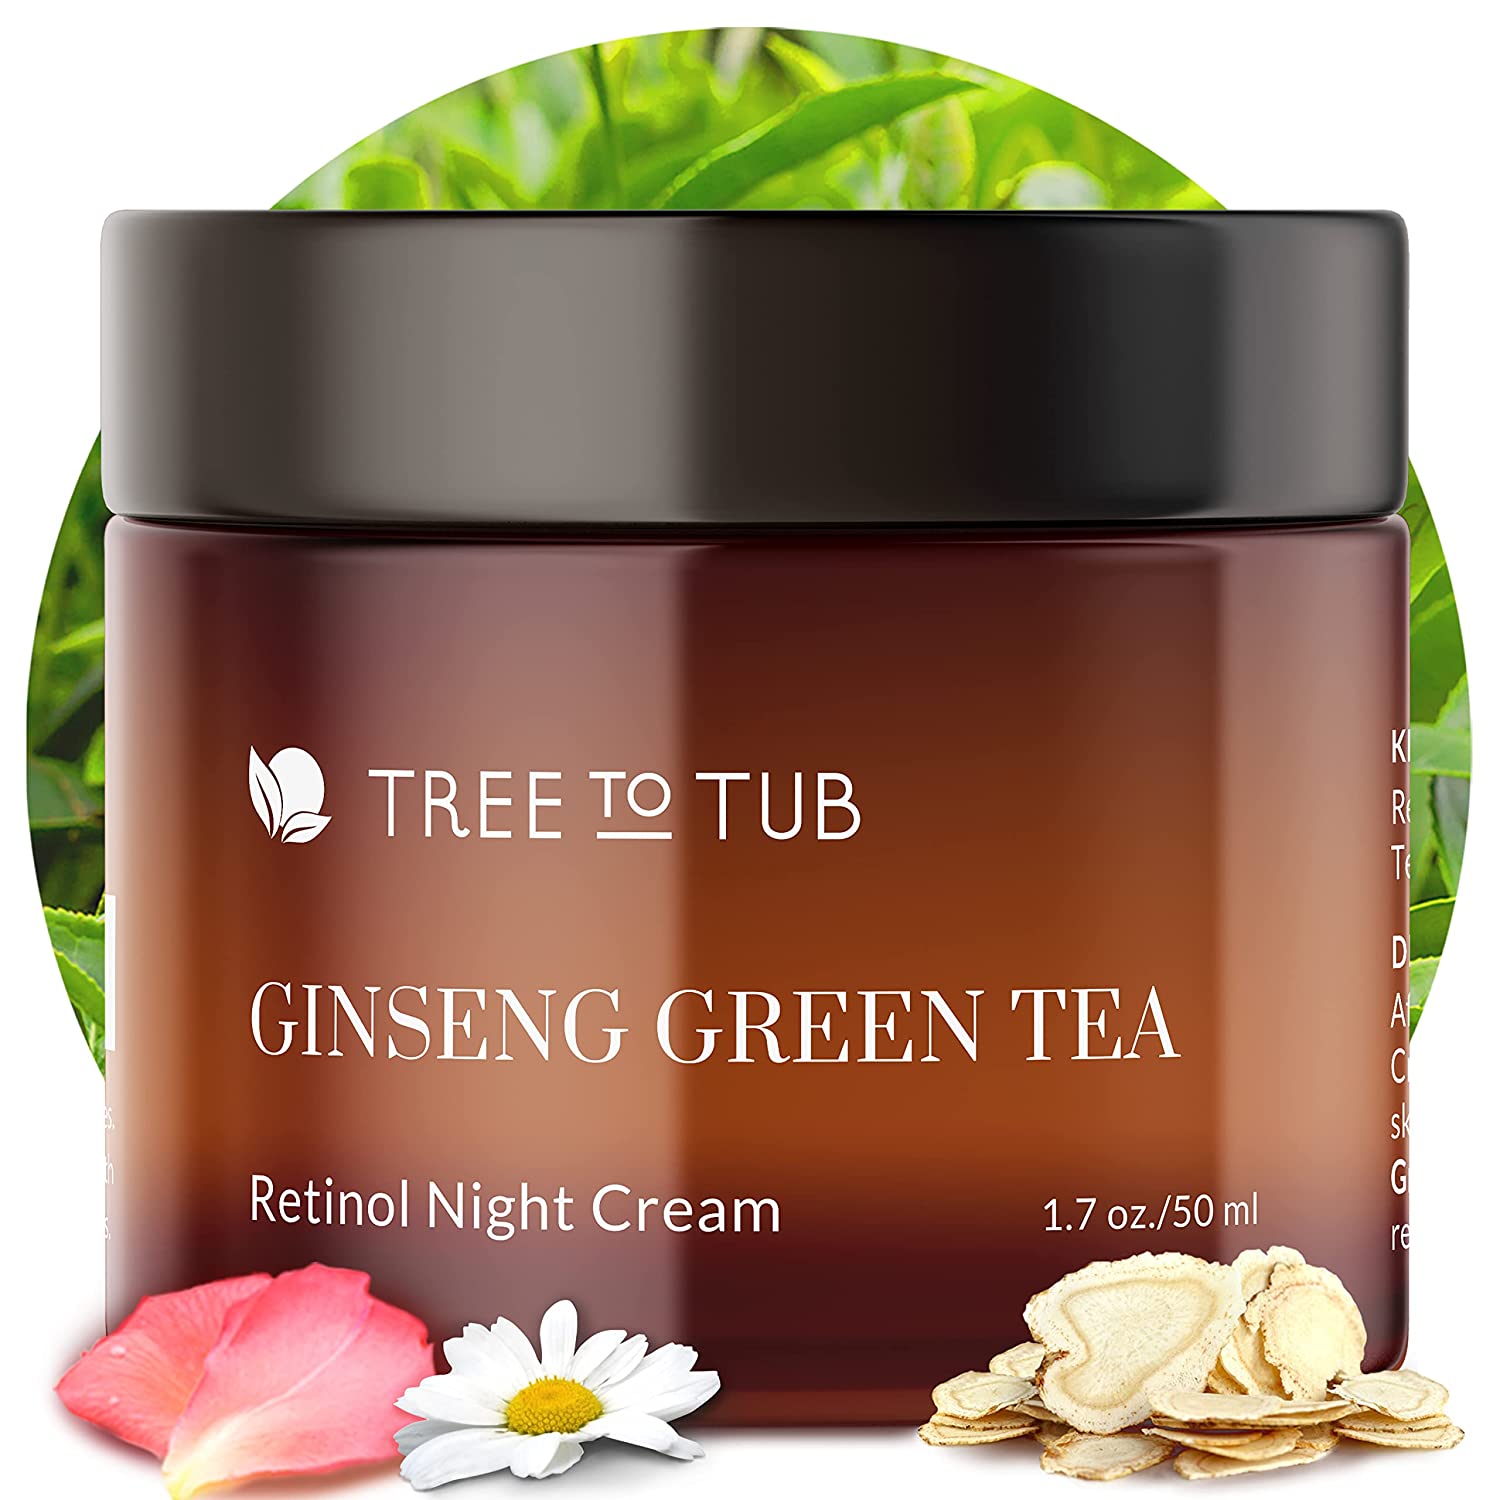 Tree to Tub Ginseng Green Tea Retinol Night Cream